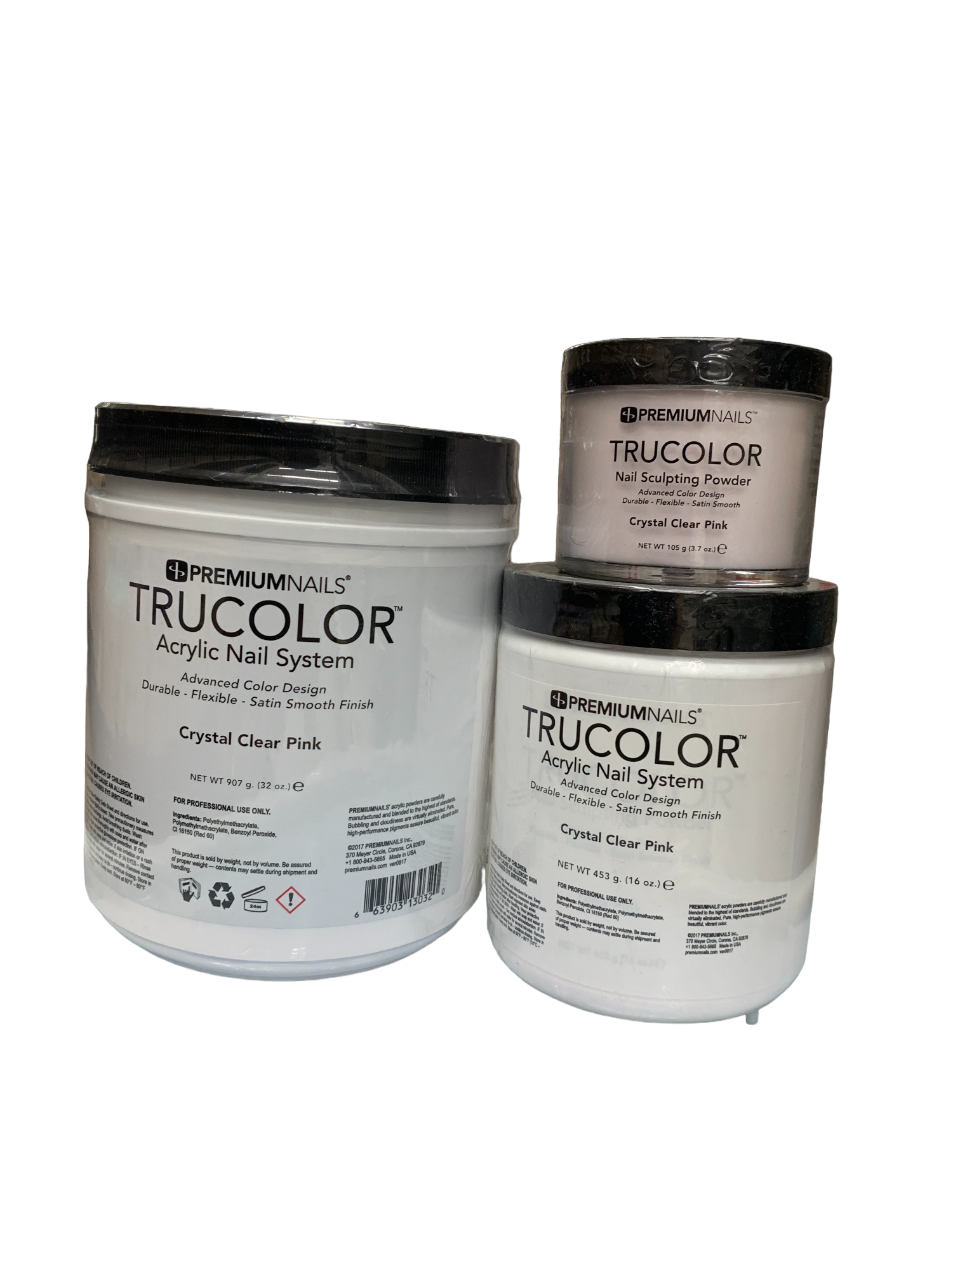 Premiumnails Trucolor Acrylic Powder - TCCCP - Crystal Clear Pink